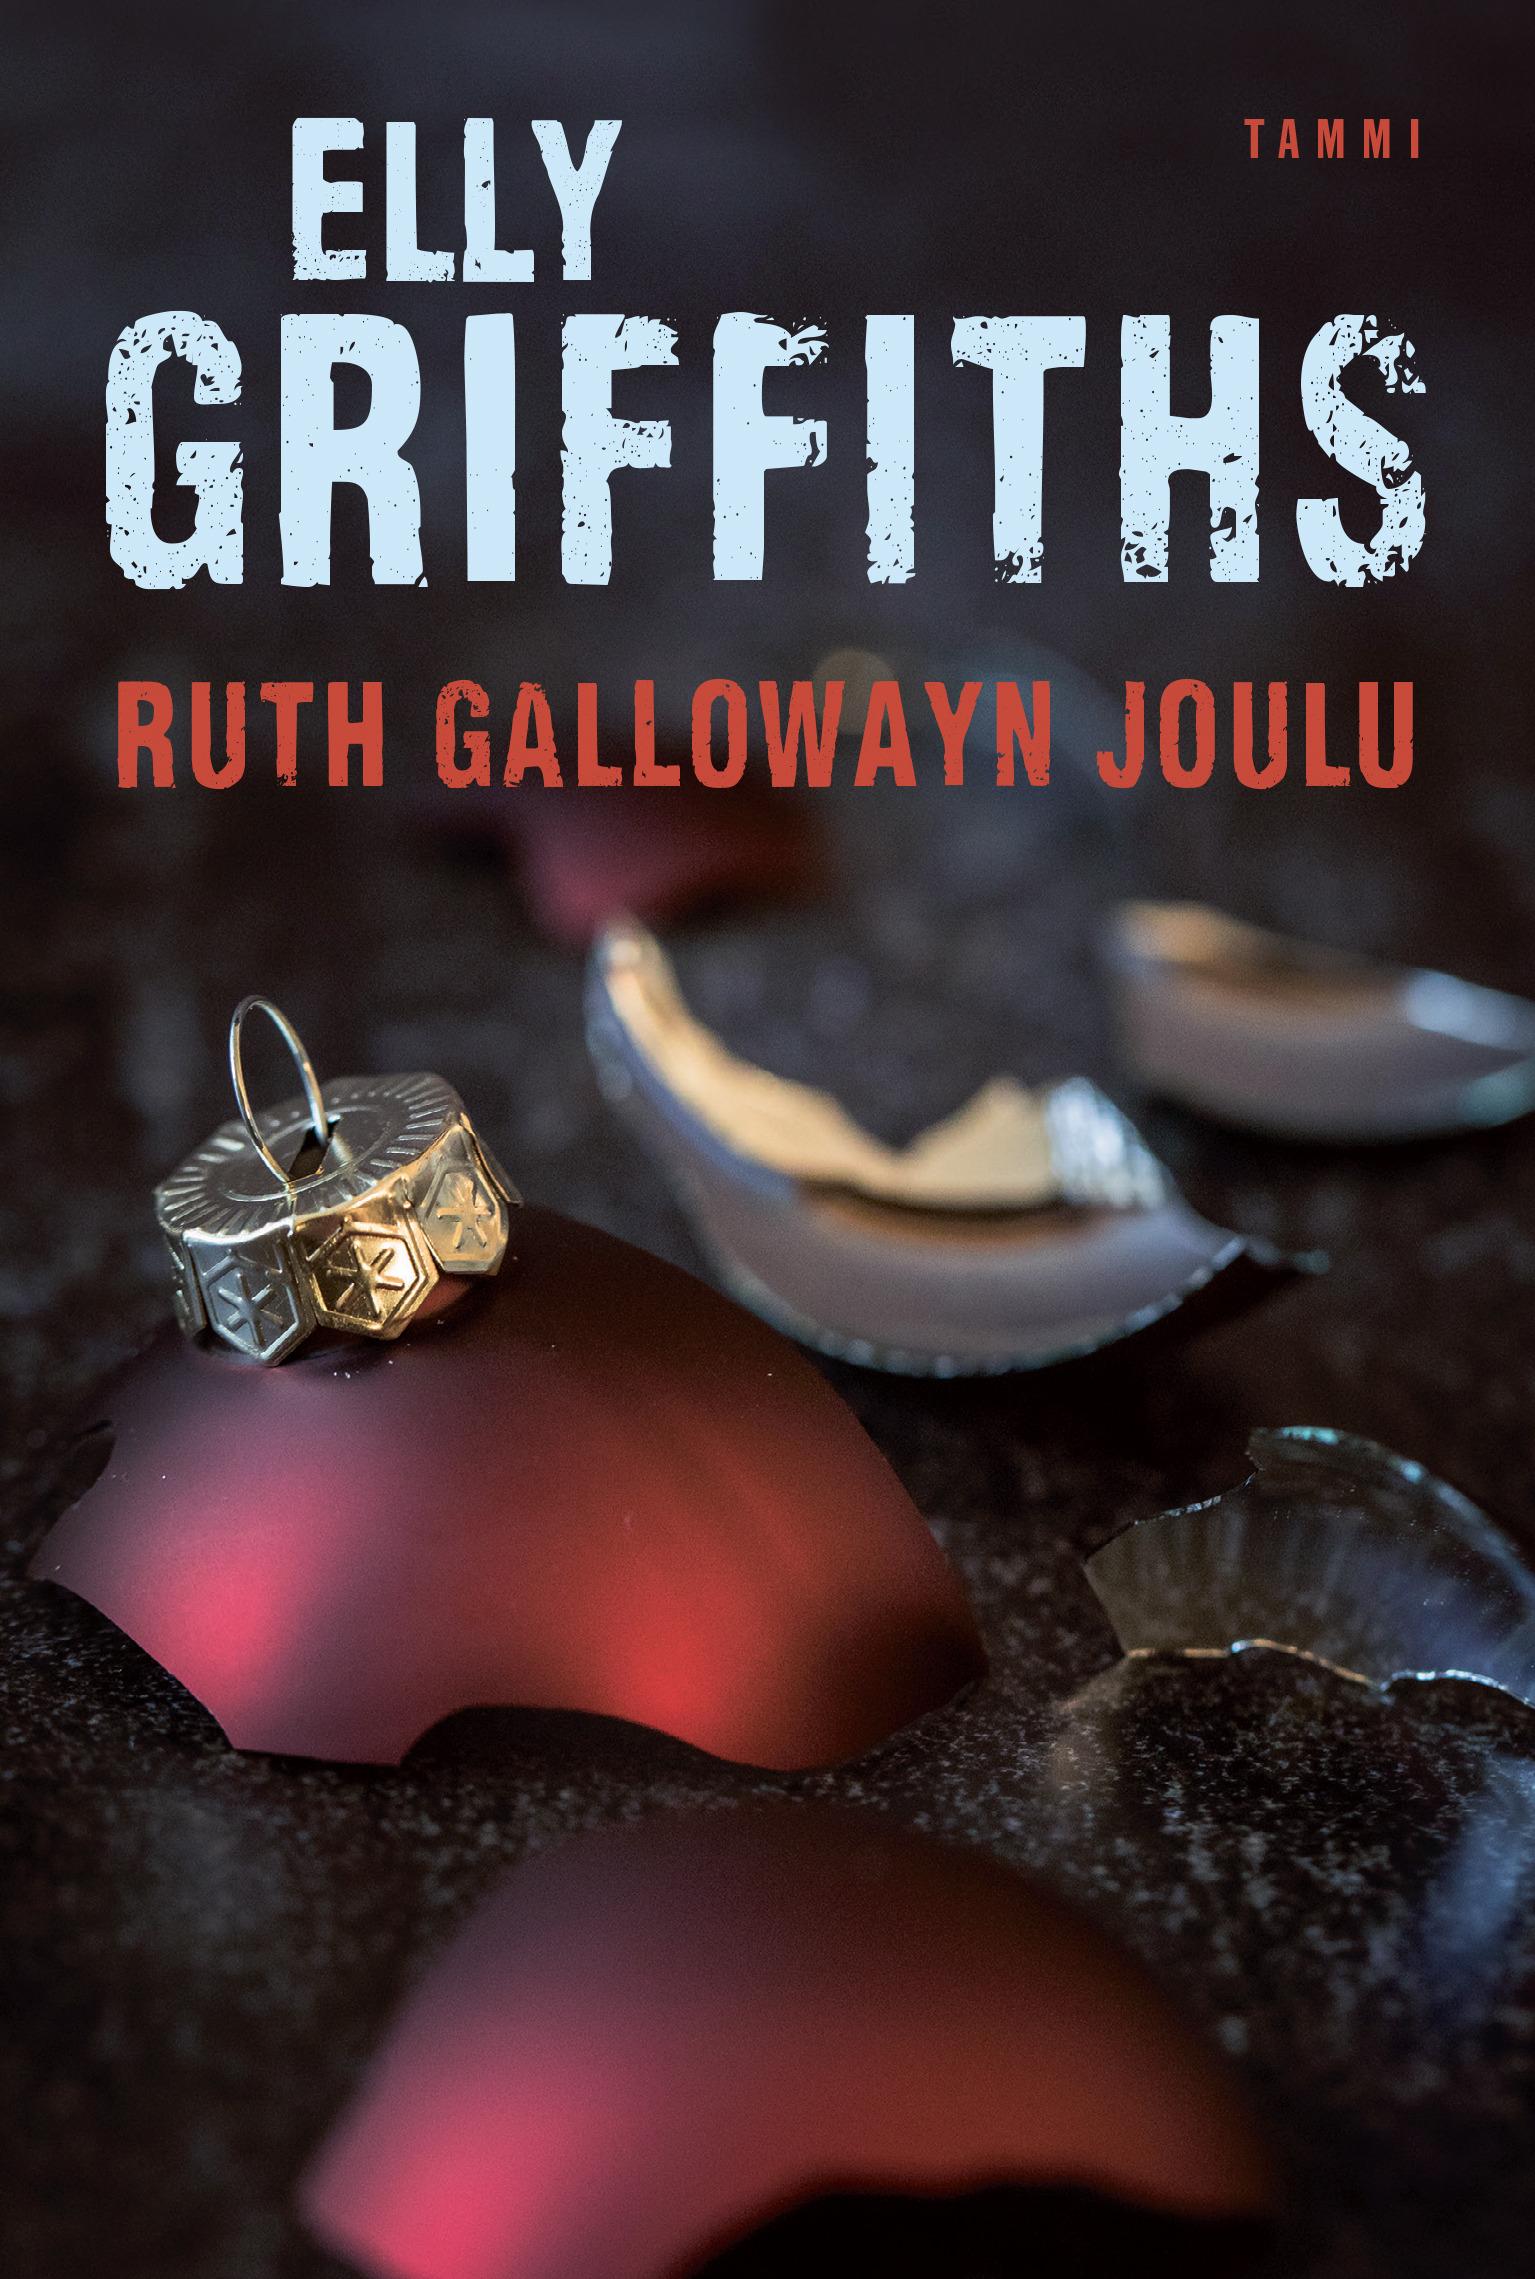 Elly Griffiths: Ruth Gallowayn joulu (Hardcover, suomi language, Tammi)